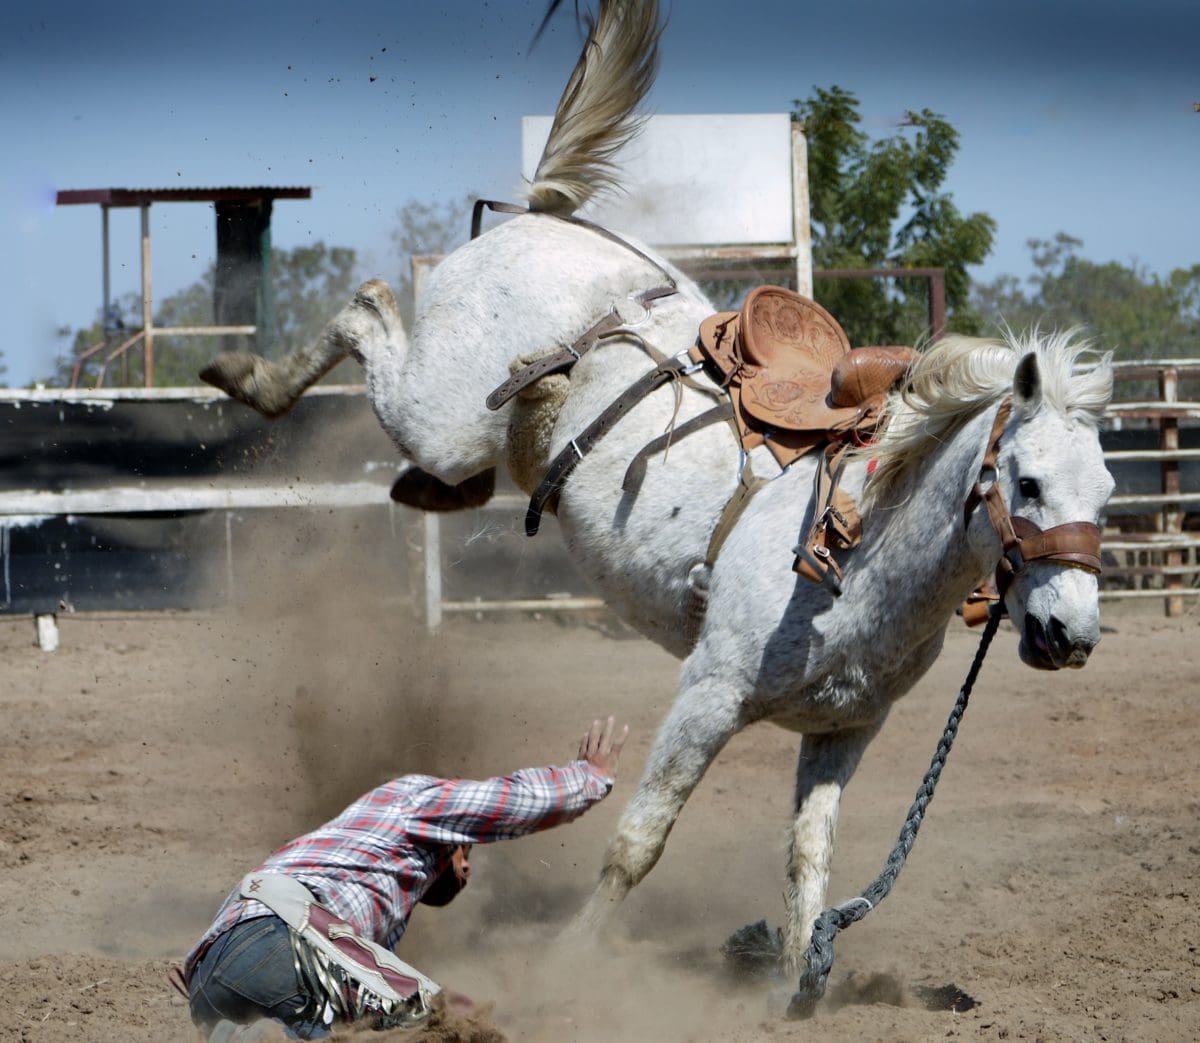 A horse bucks a rider off during an inhumane bronc riding rodeo event